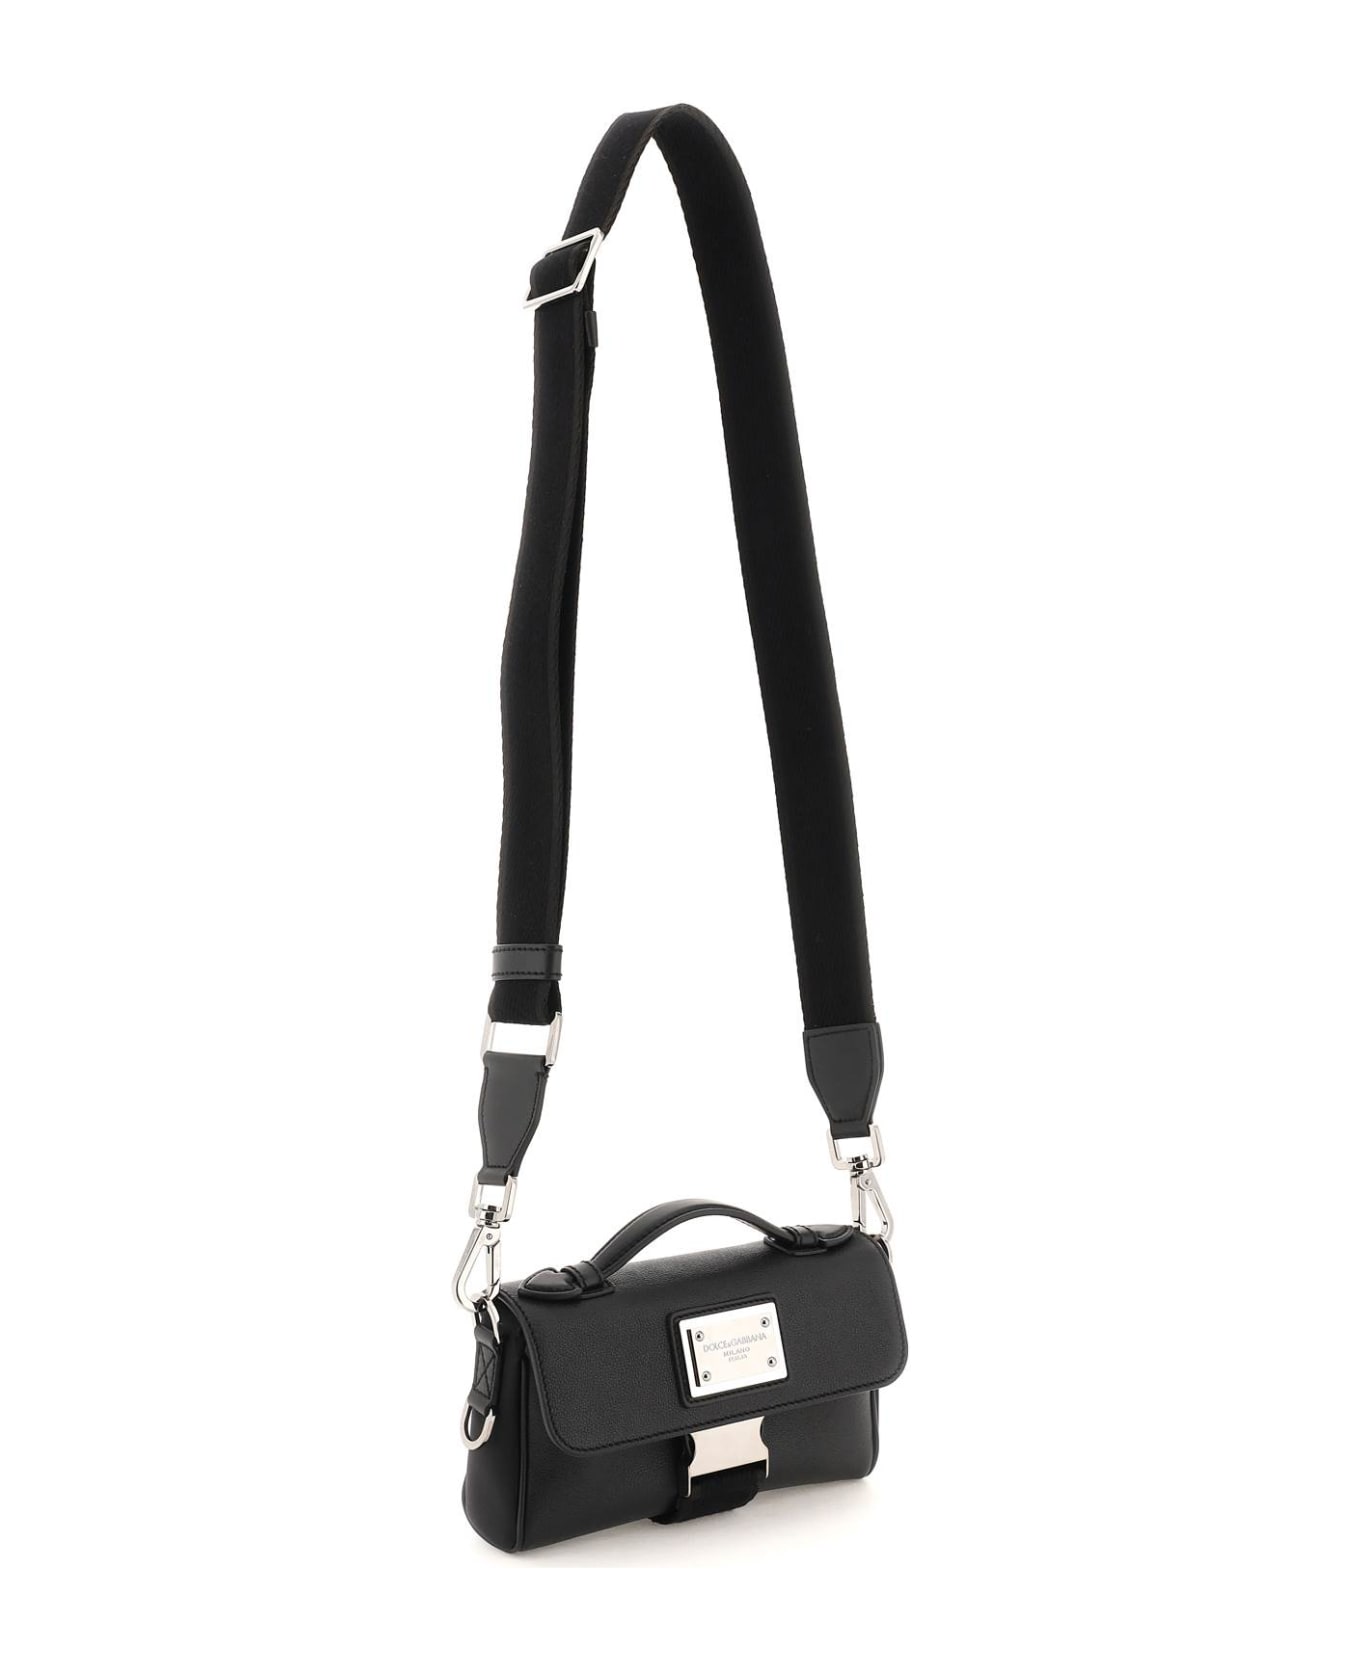 Dolce & Gabbana Handbag - NERO NERO (Black)